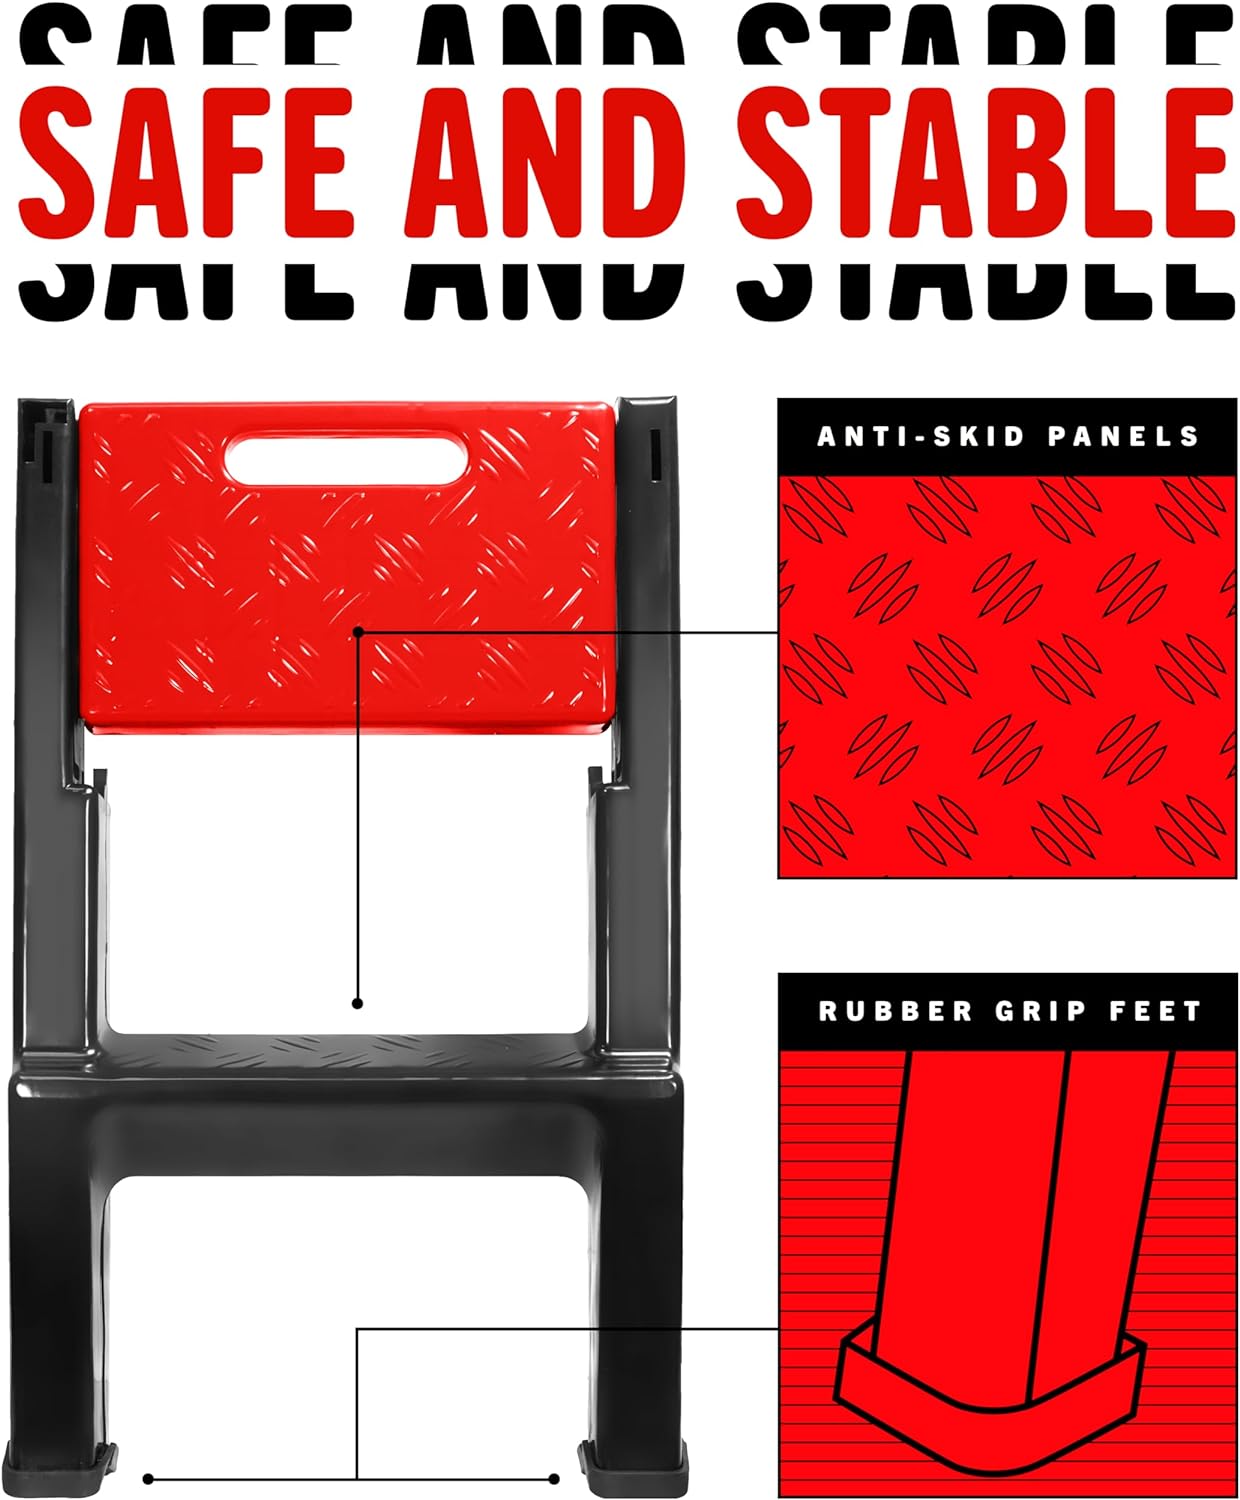 Folding Ladder 4.5kg High Stability 2 Step - 150kg Capacity (MCF)